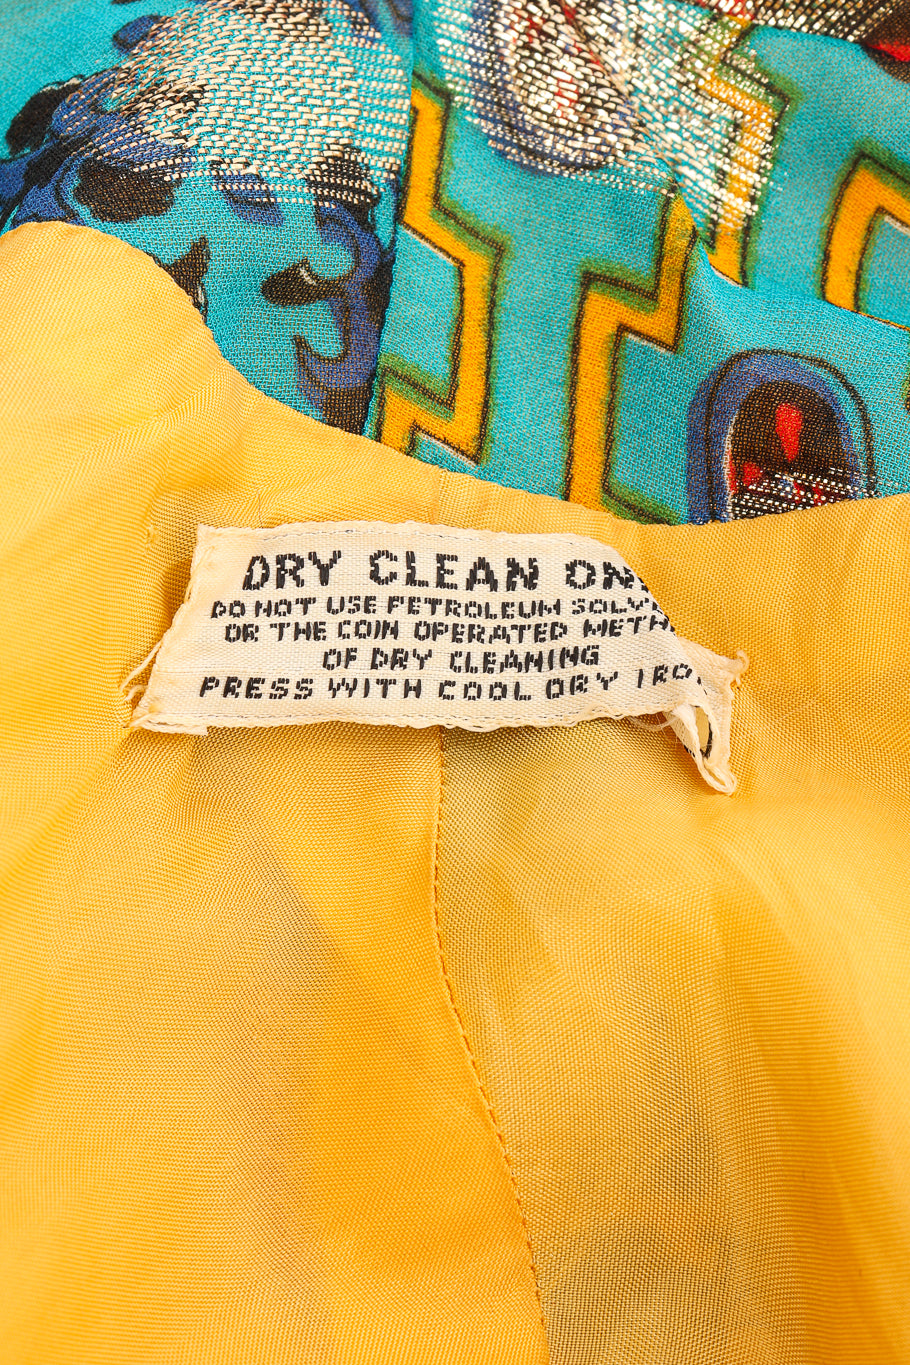 Vintage Malcolm Starr Paisley Print Hostess Dress care instruction label closeup @Recessla